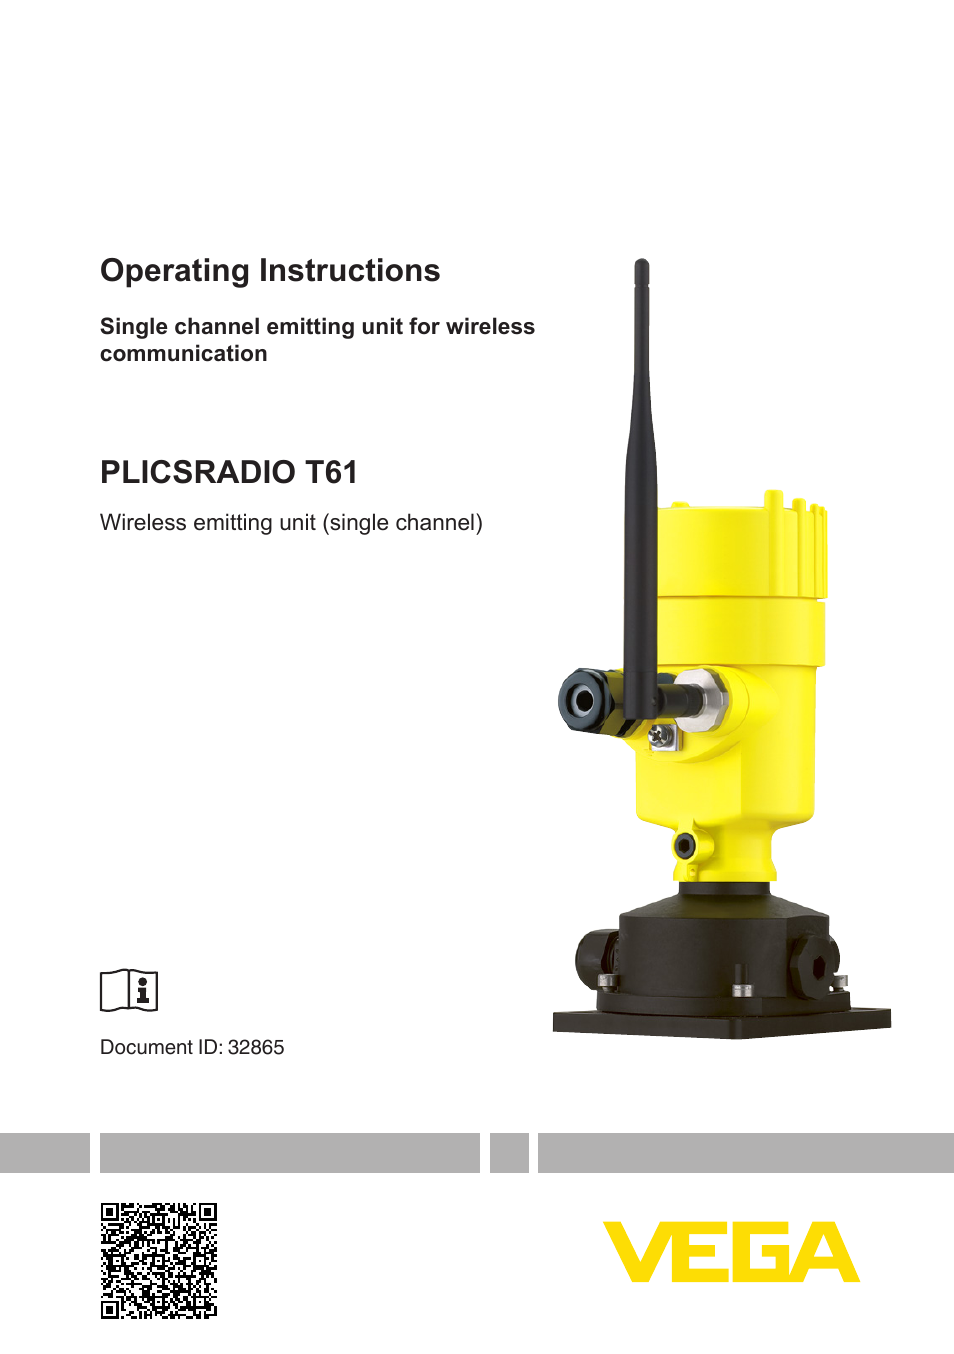 PLICSRADIO T61 Wireless emitting unit